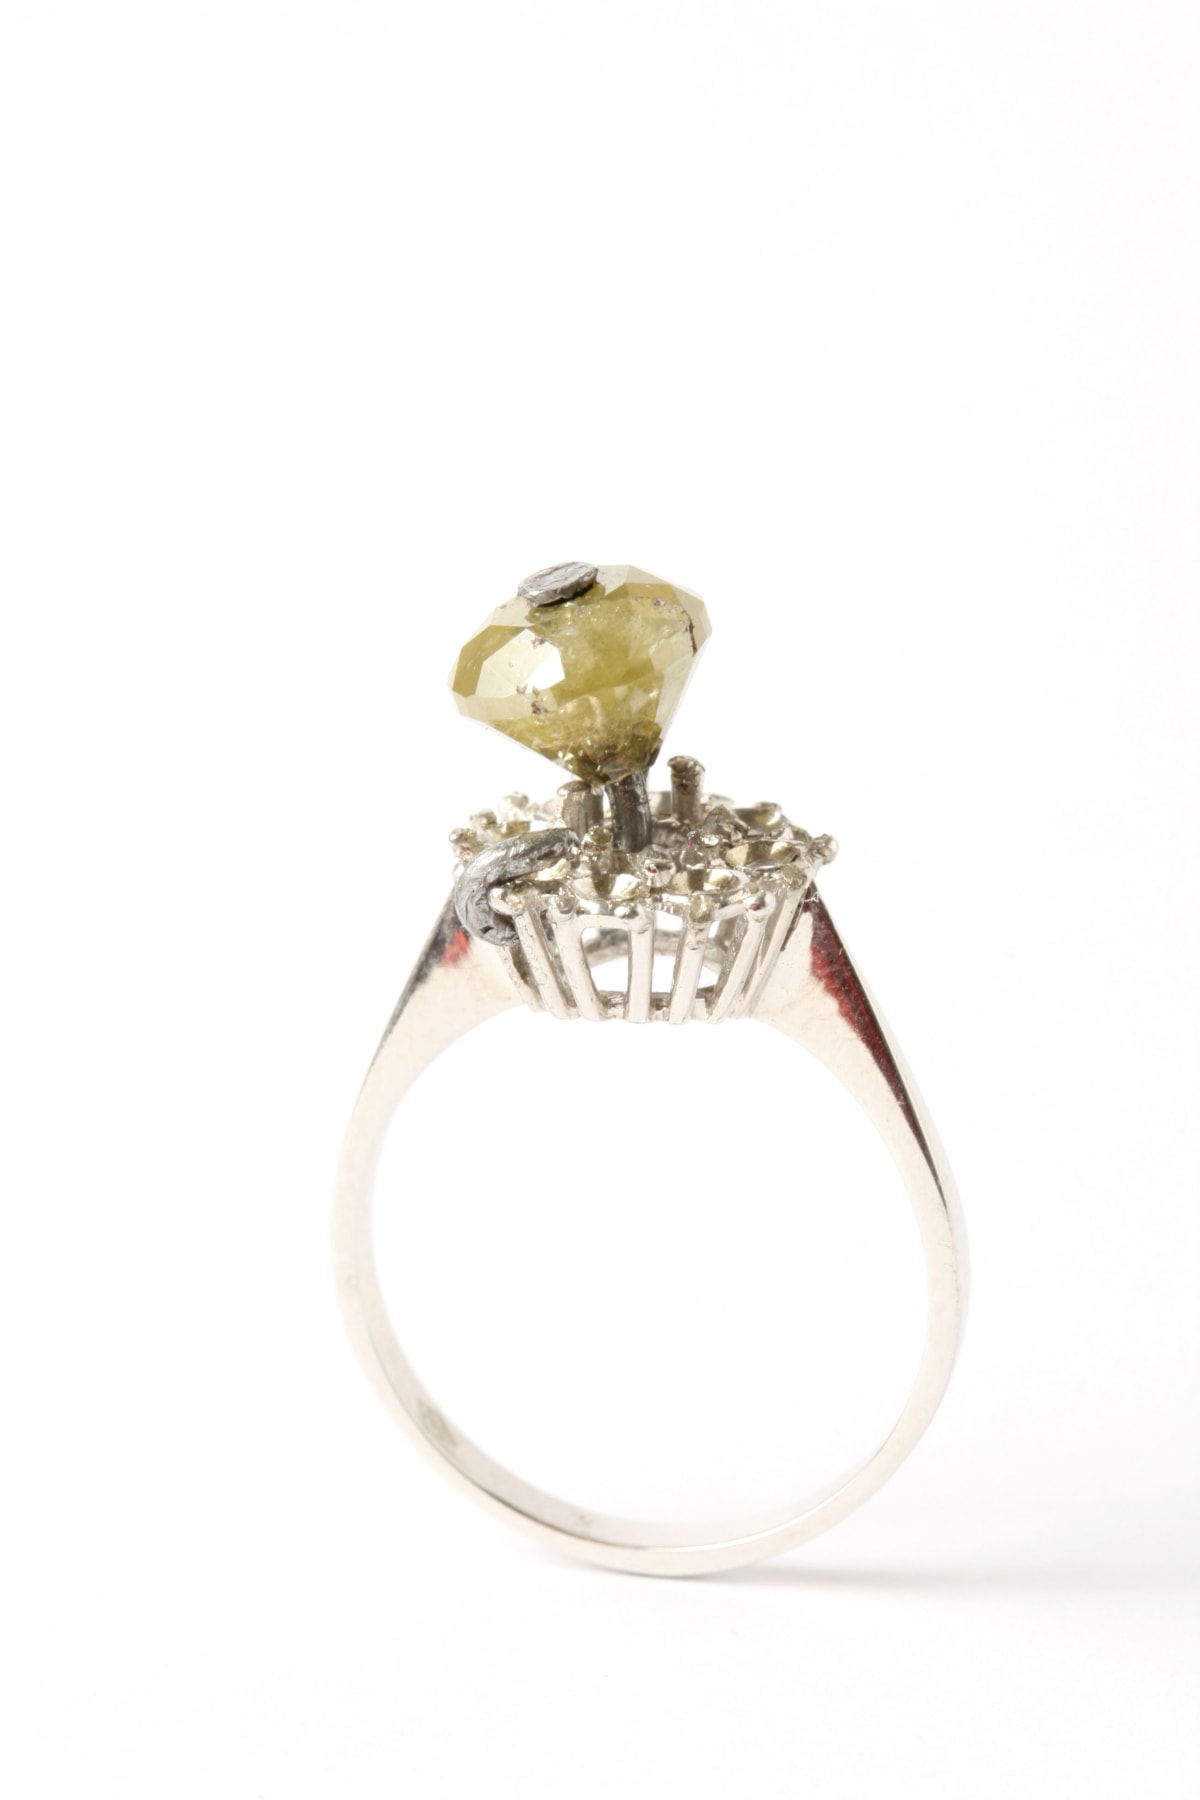 Karl Fritsch diamond ring